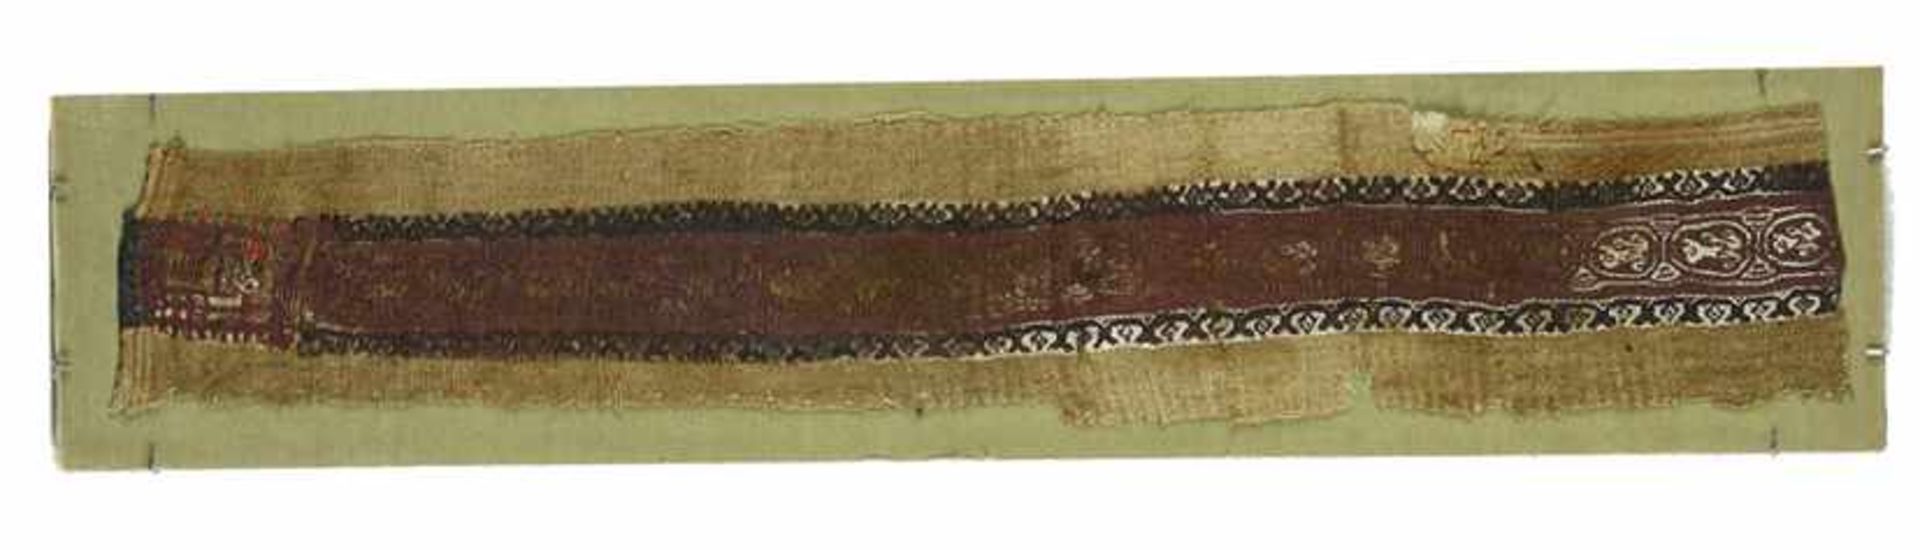 Koptisch textiel fragment, circa 10e eeuw - 60 x 10 cm -